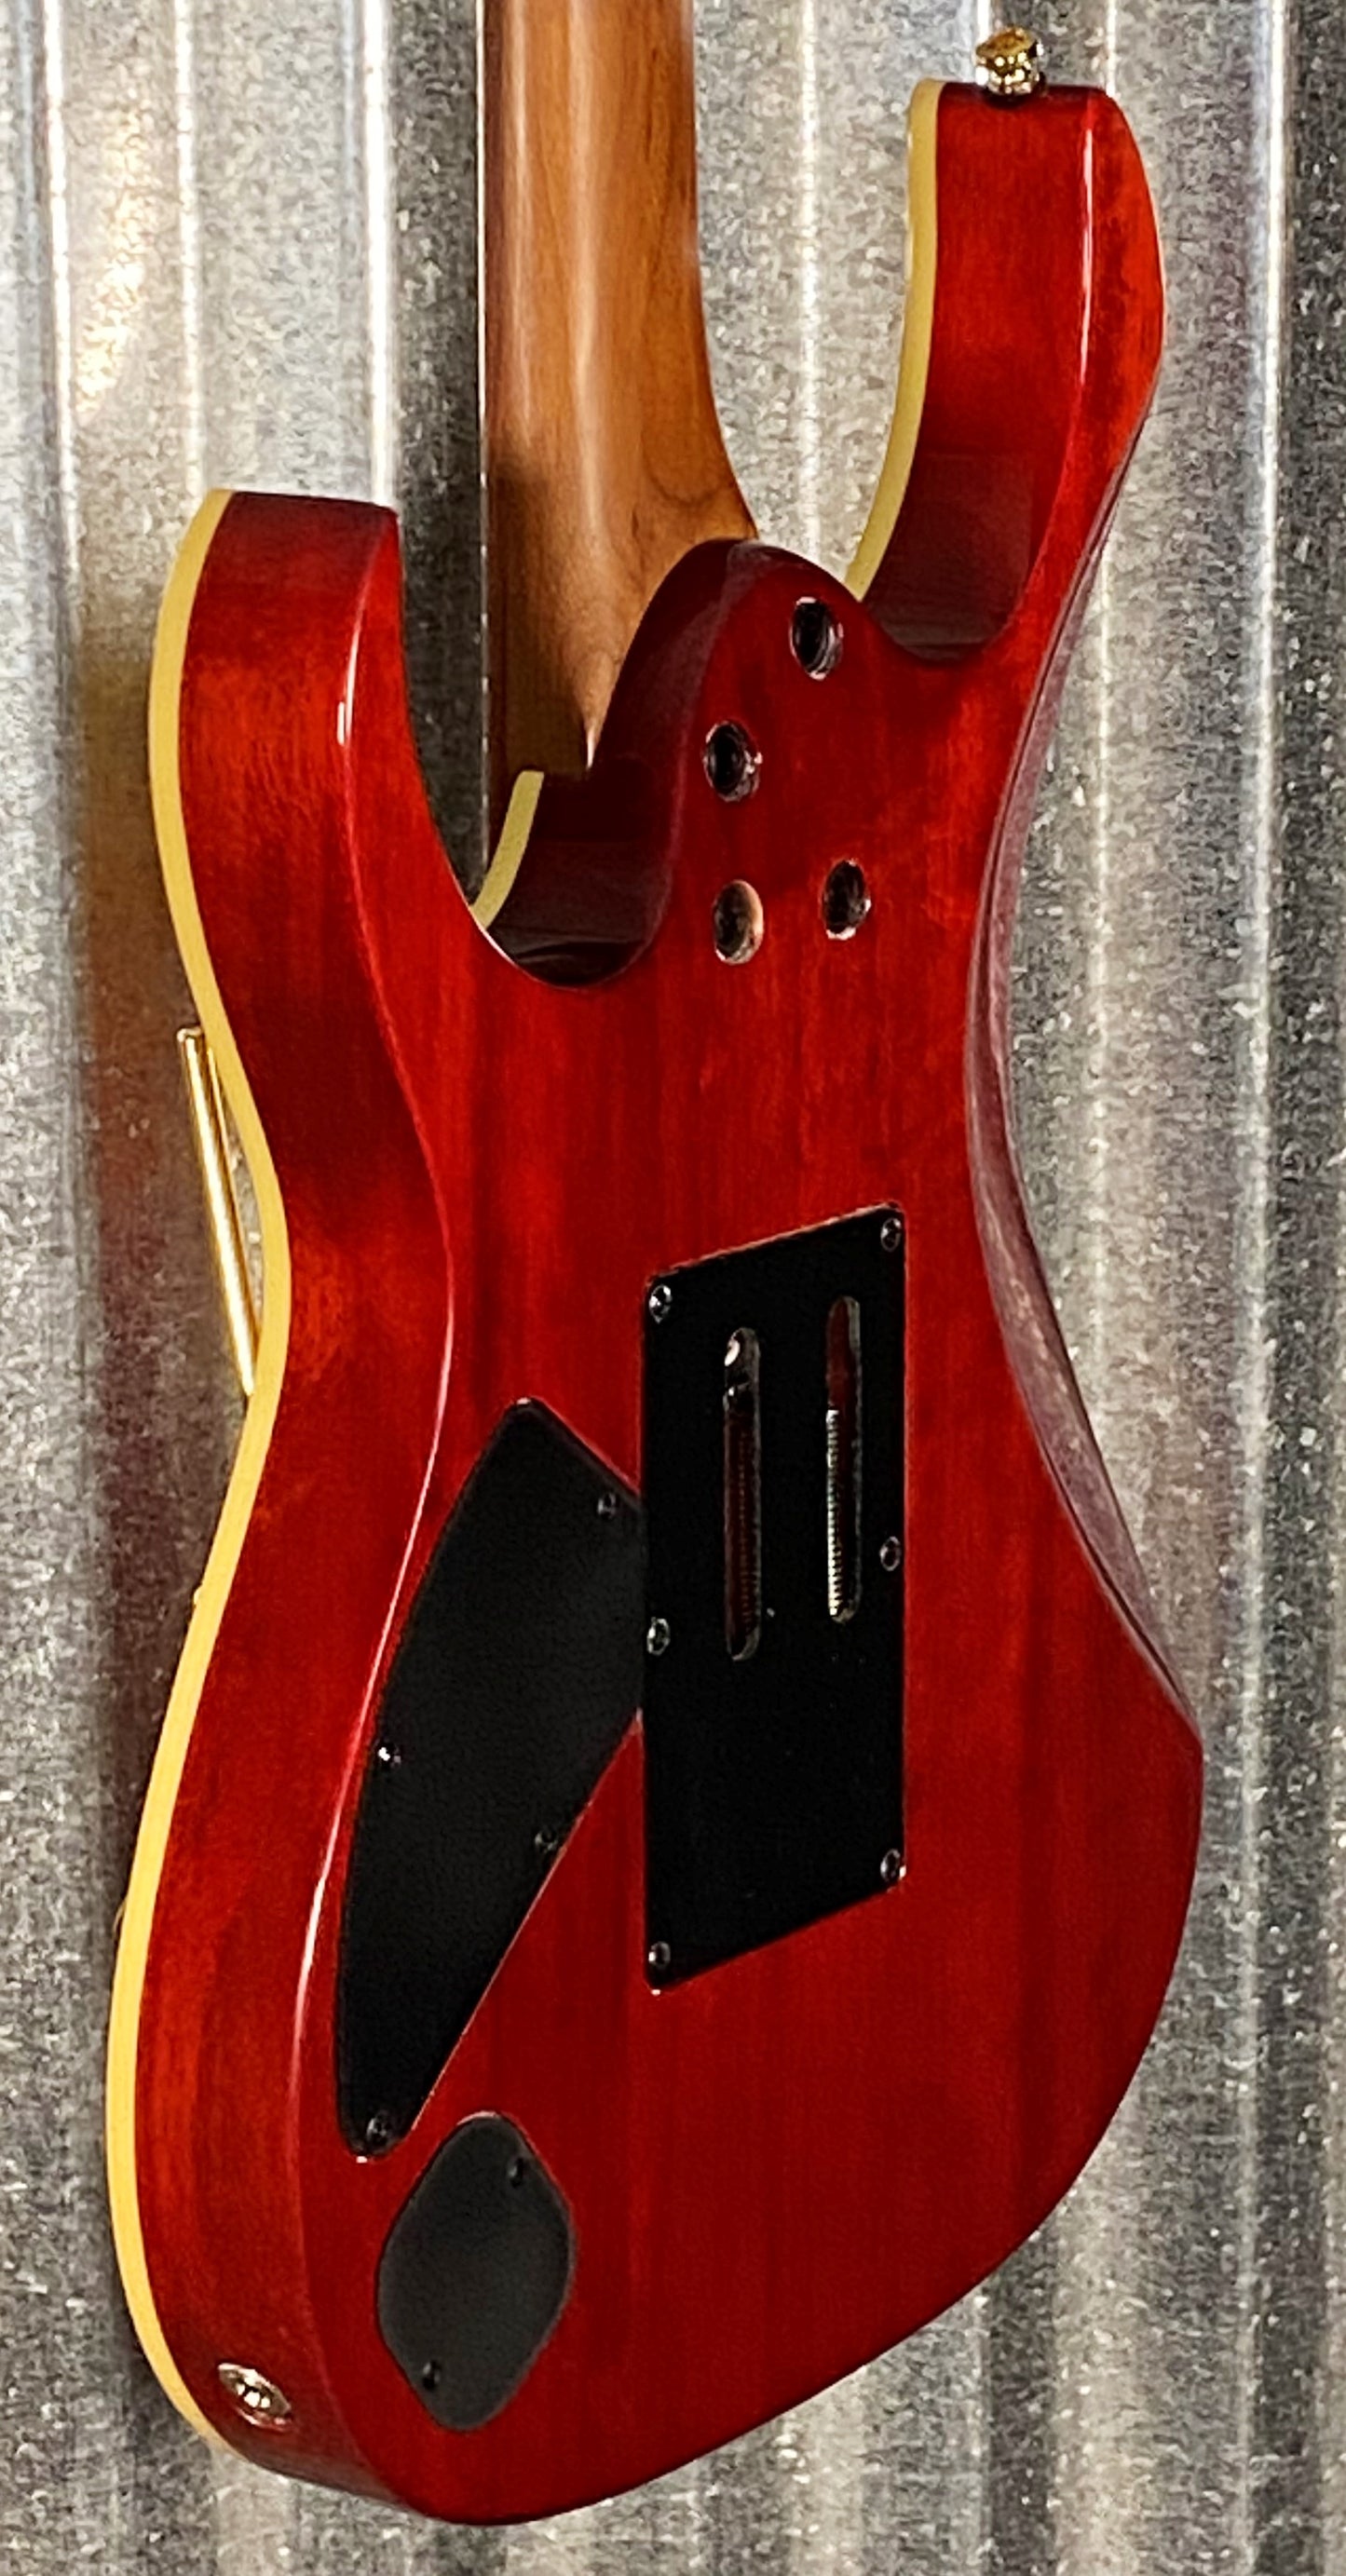 Ibanez RG420HPFM Flame Maple Roasted Neck DiMarzio Guitar & Bag #4900 Used